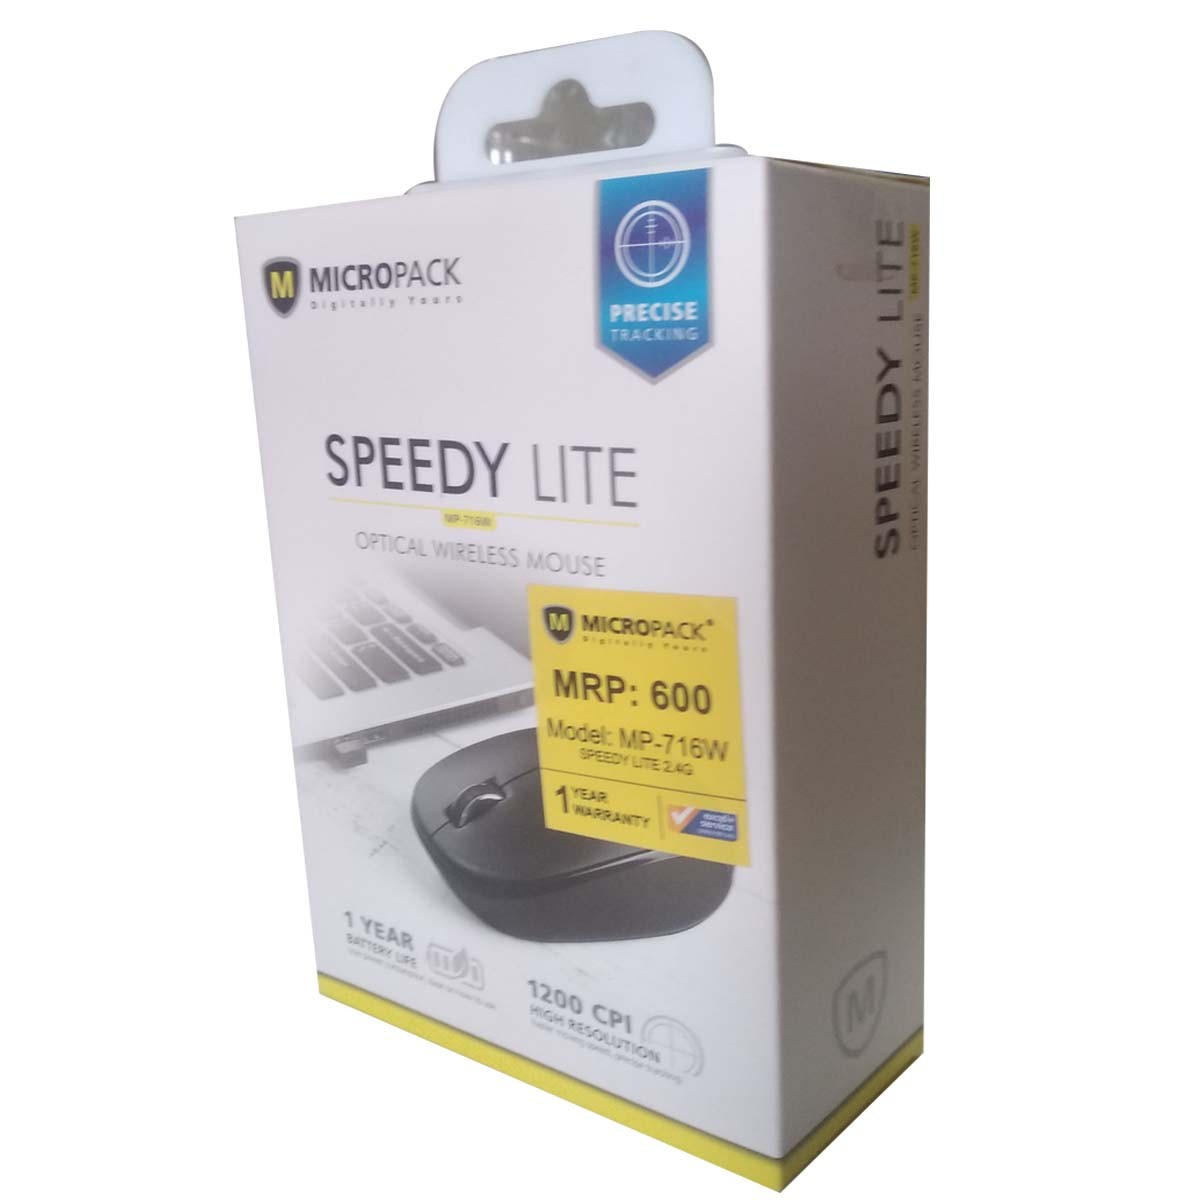 Micropack Speedy lite Wireless Mouse